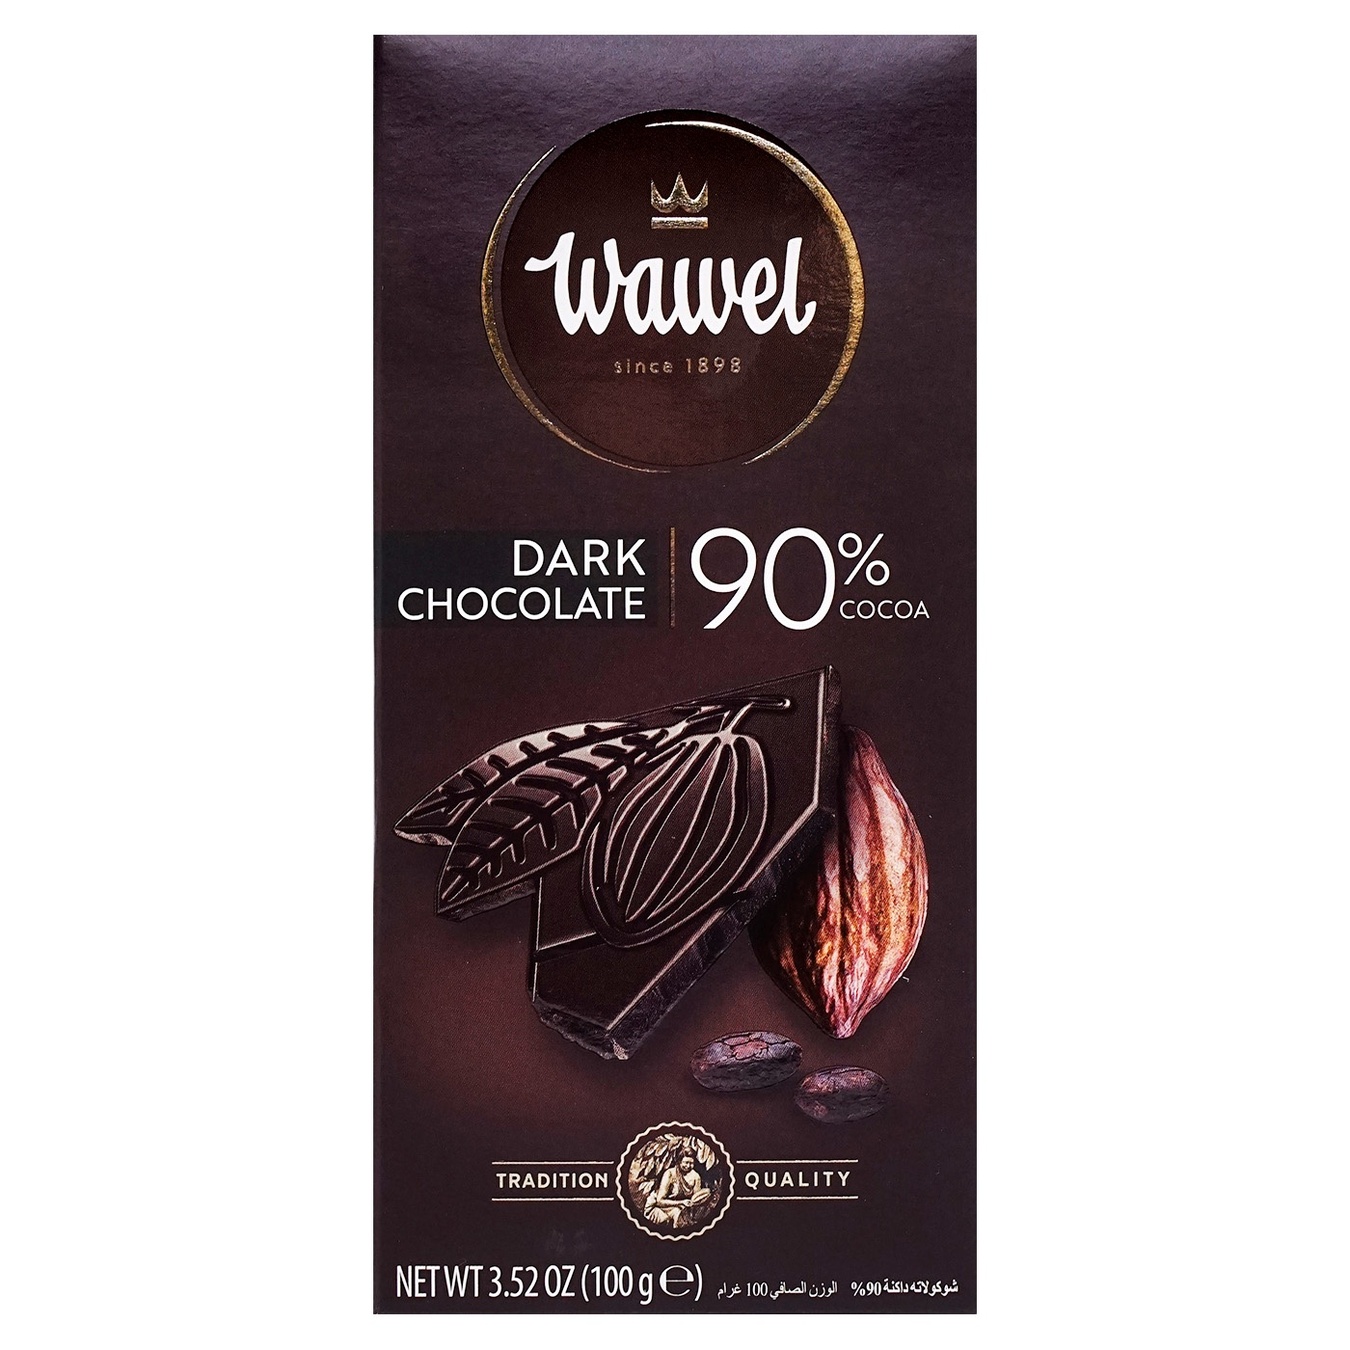 Wawel dark chocolate 90% cocoa 100g